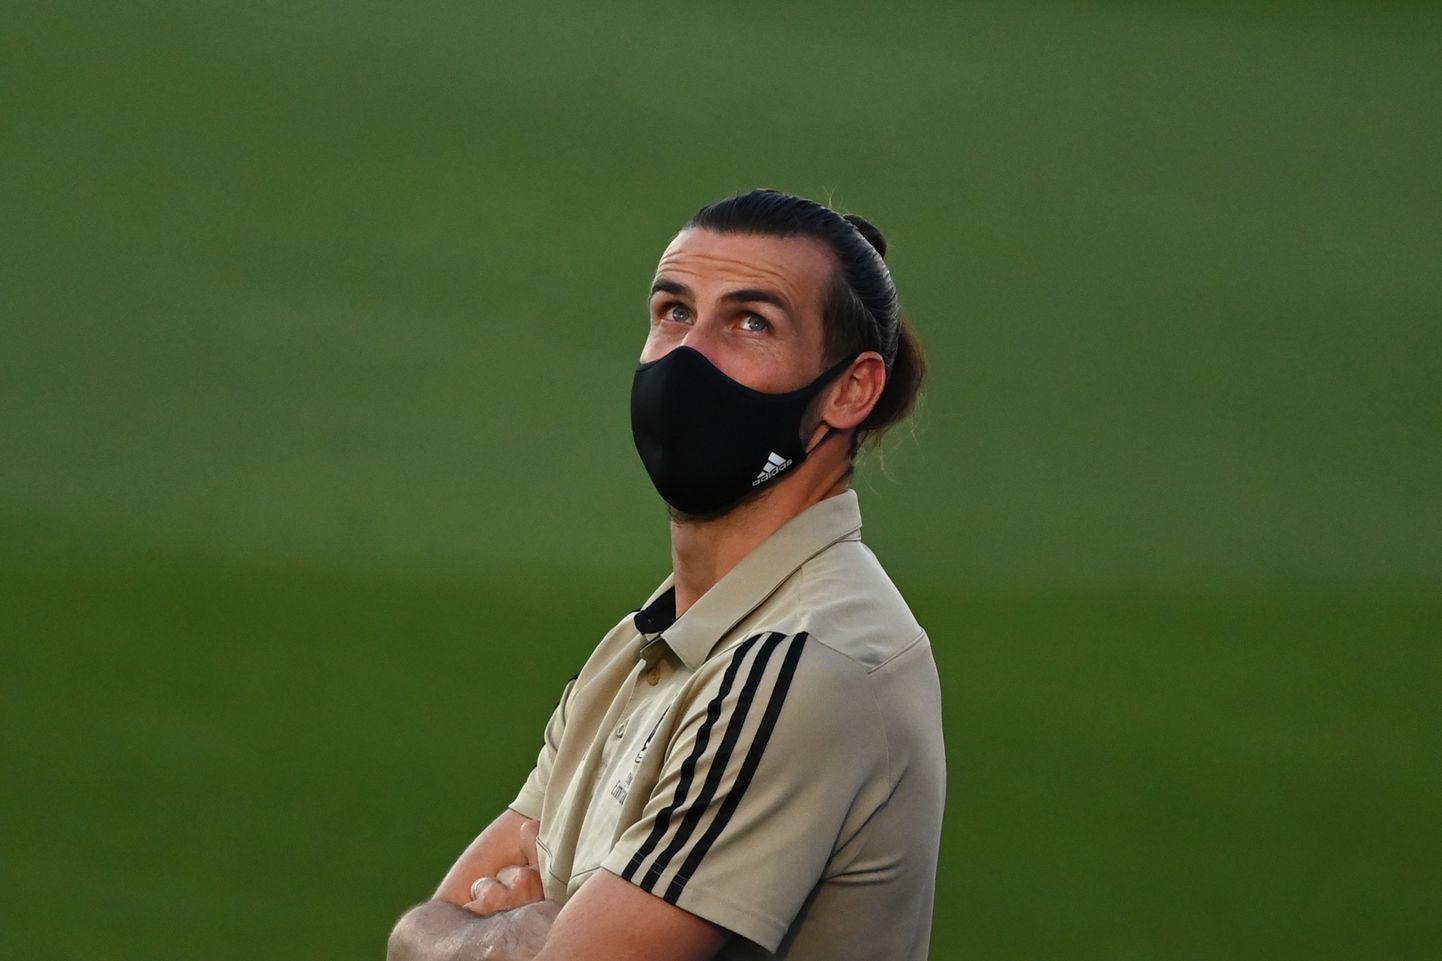 Gareth Bale.